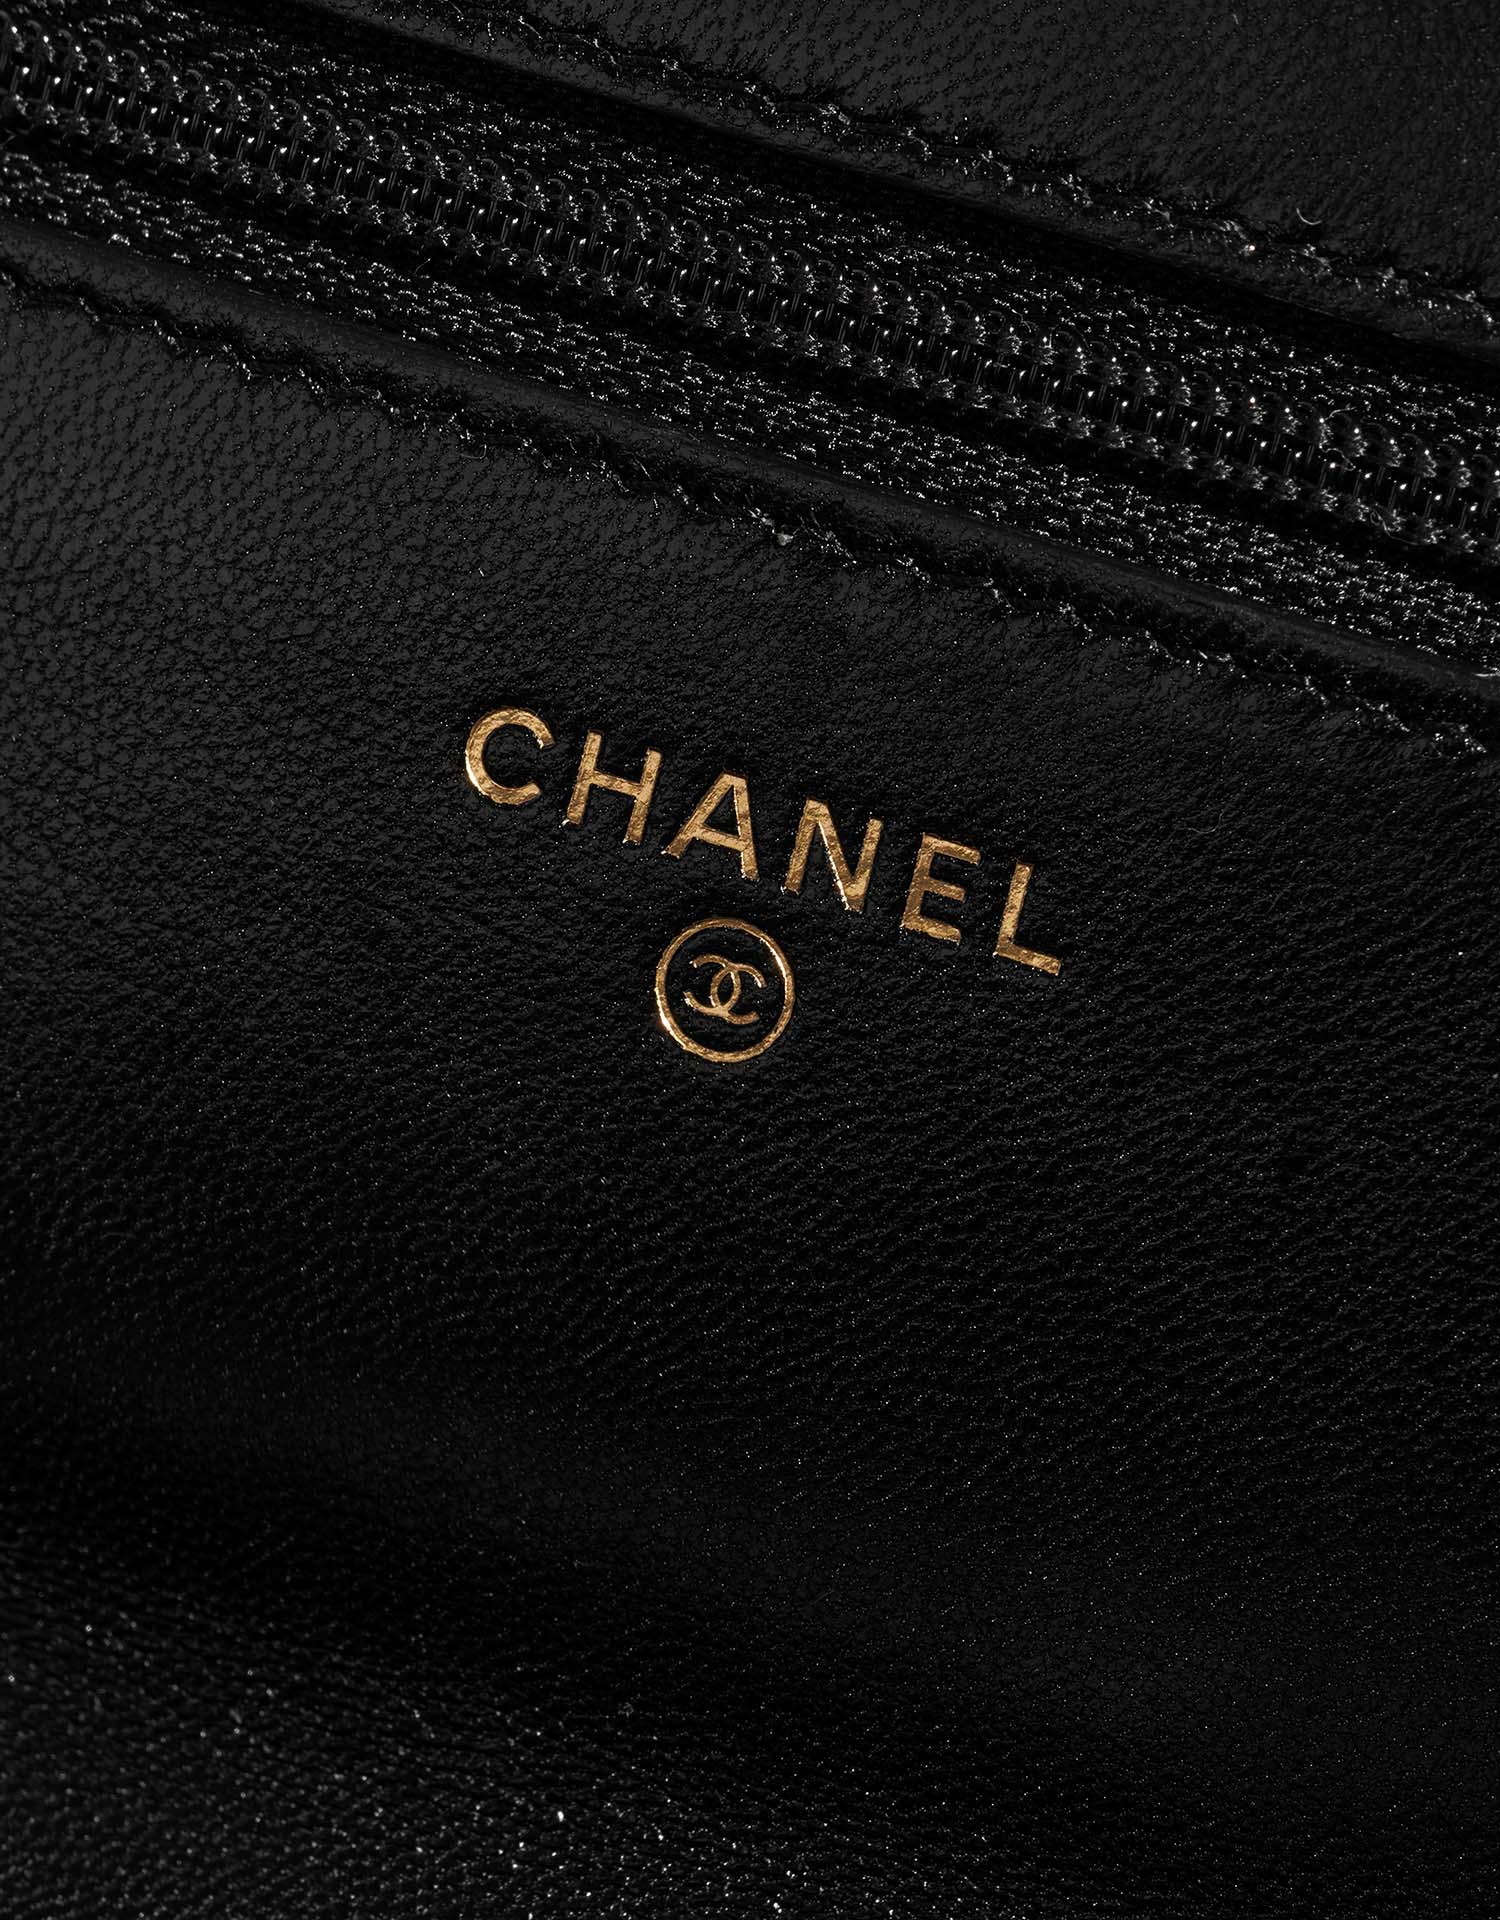 Chanel 19 WOC Black Logo  | Sell your designer bag on Saclab.com